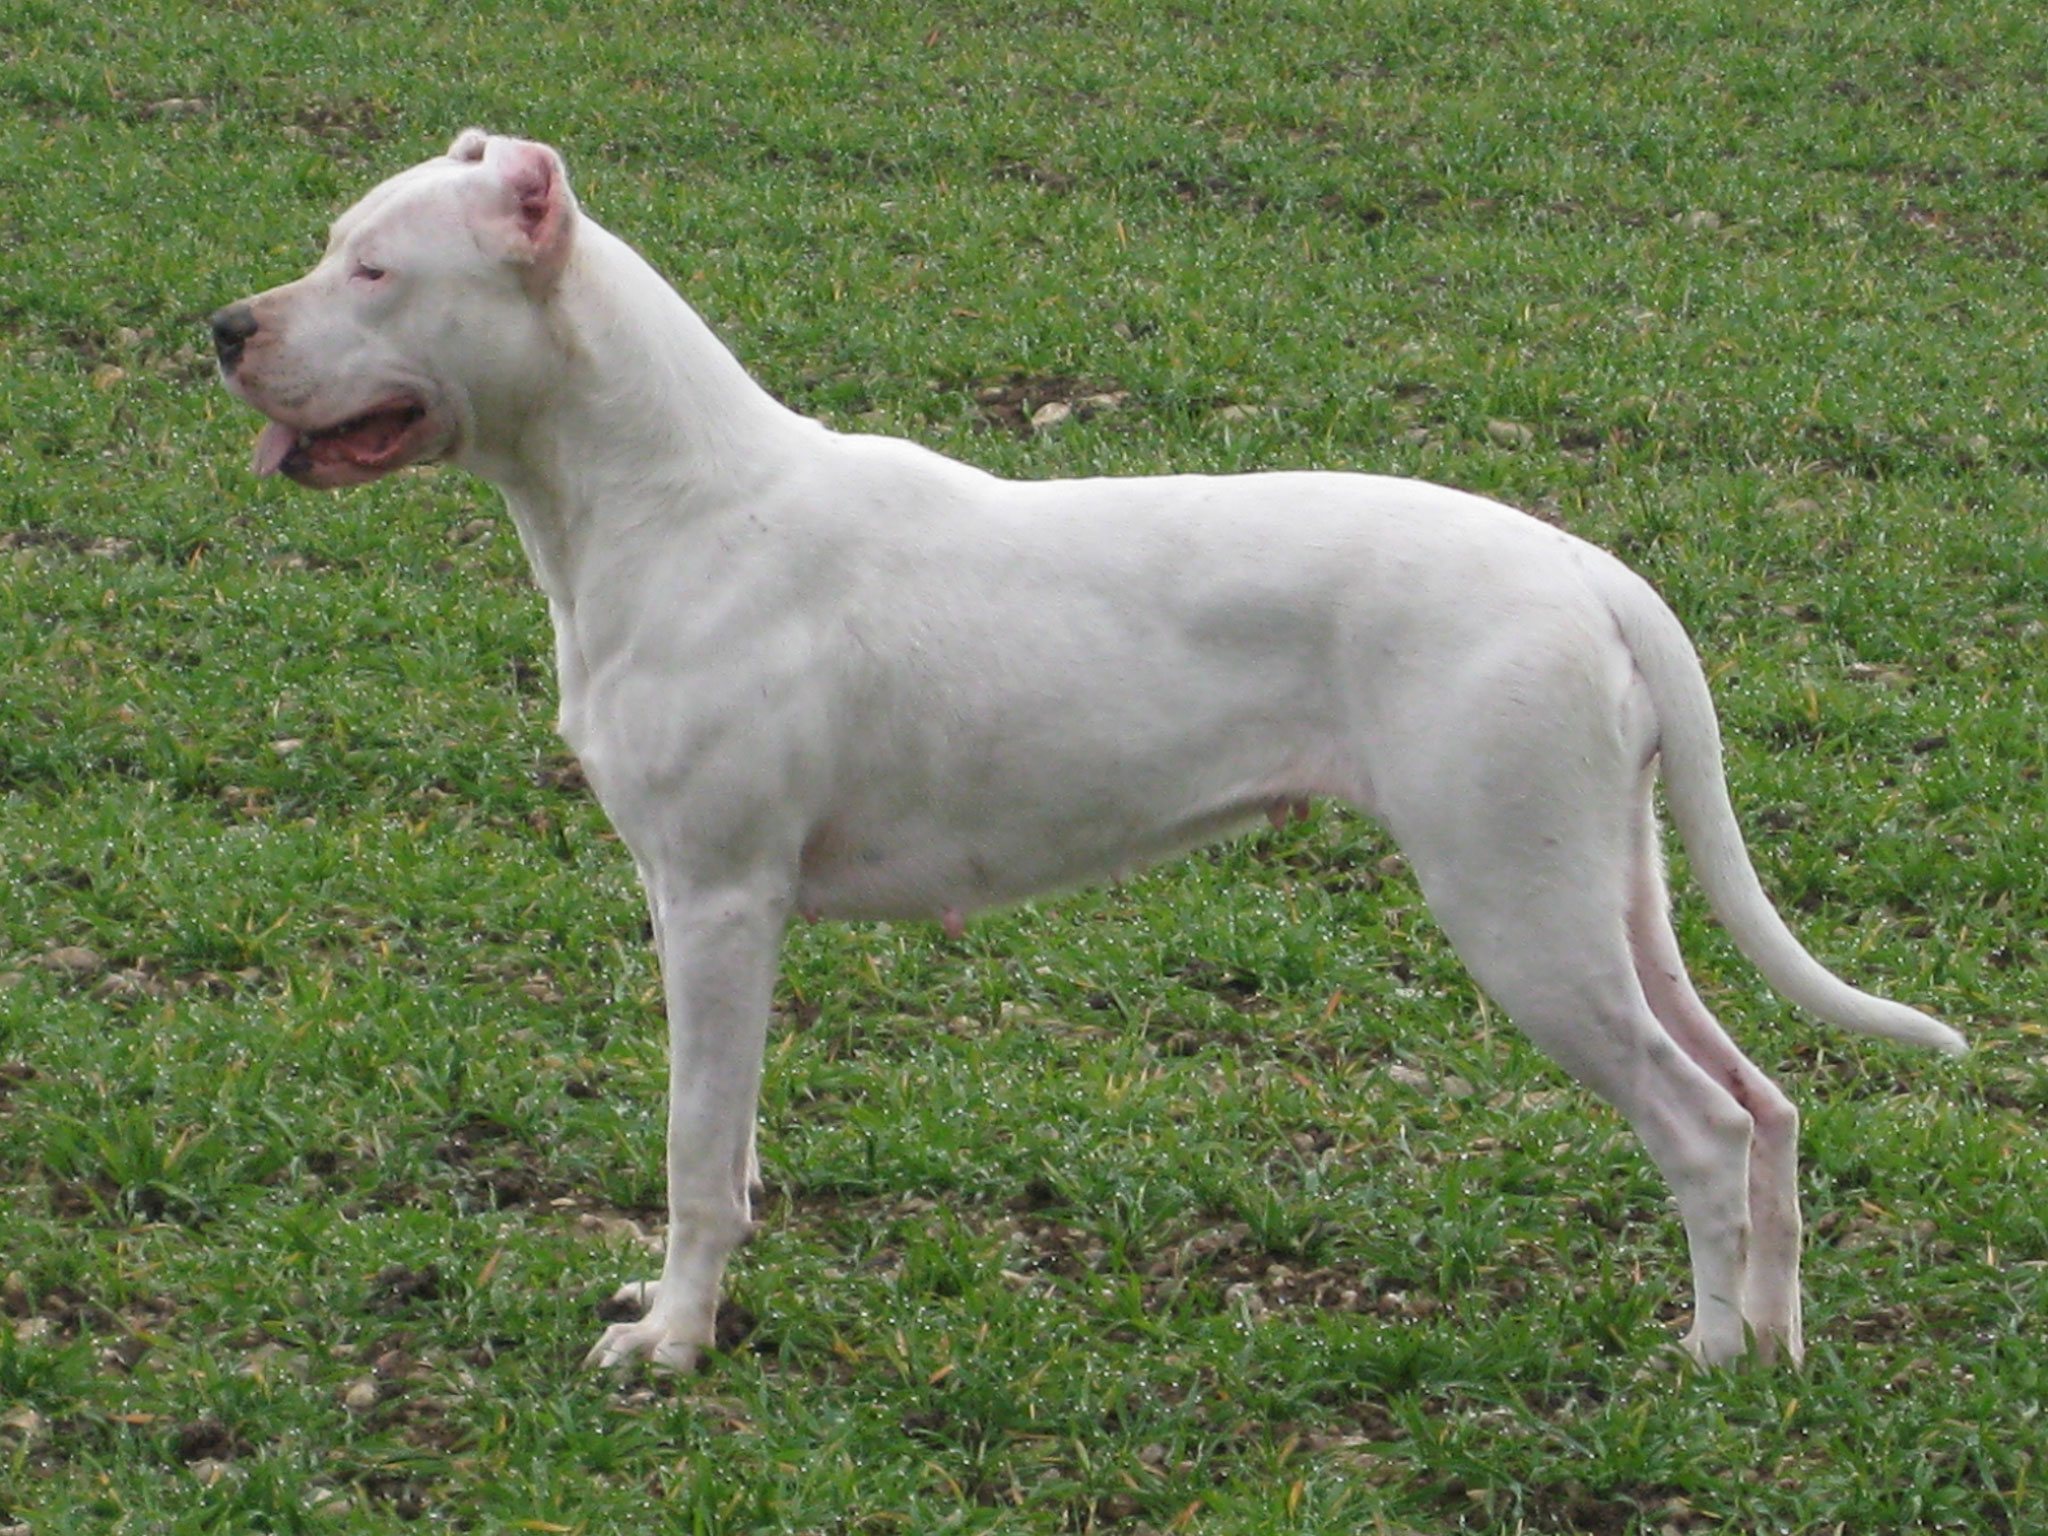 Dogo Argentino